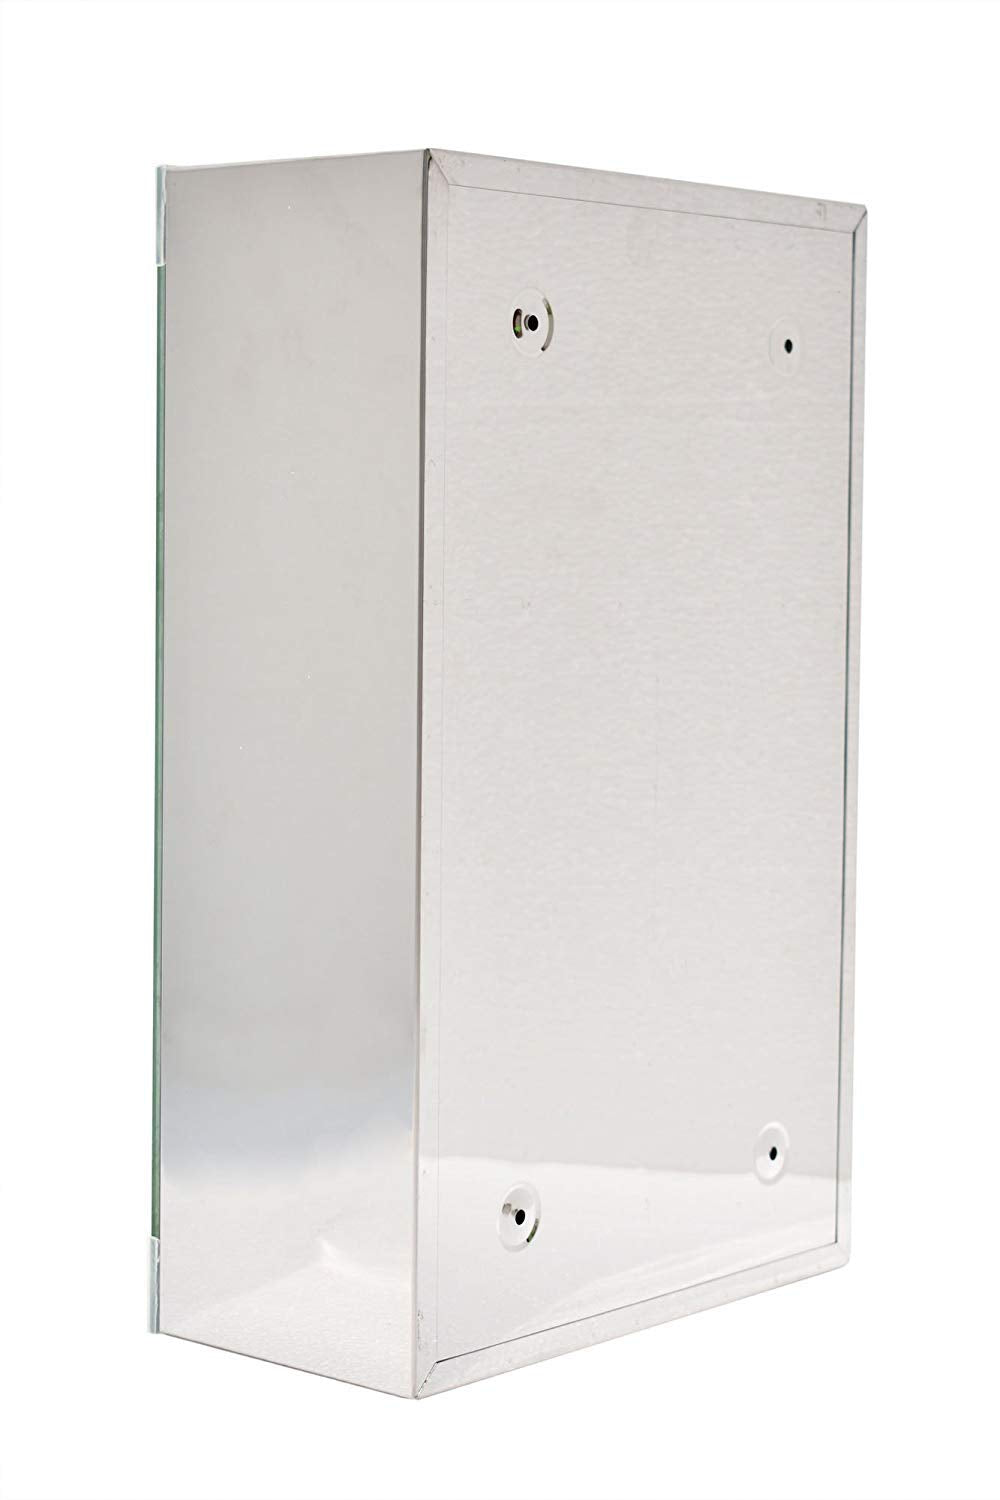 Plantex Platinum 304 Stainless Steel Bathroom Cabinet with Mirror Door/Bathroom Accessories (10 x 16 inches)